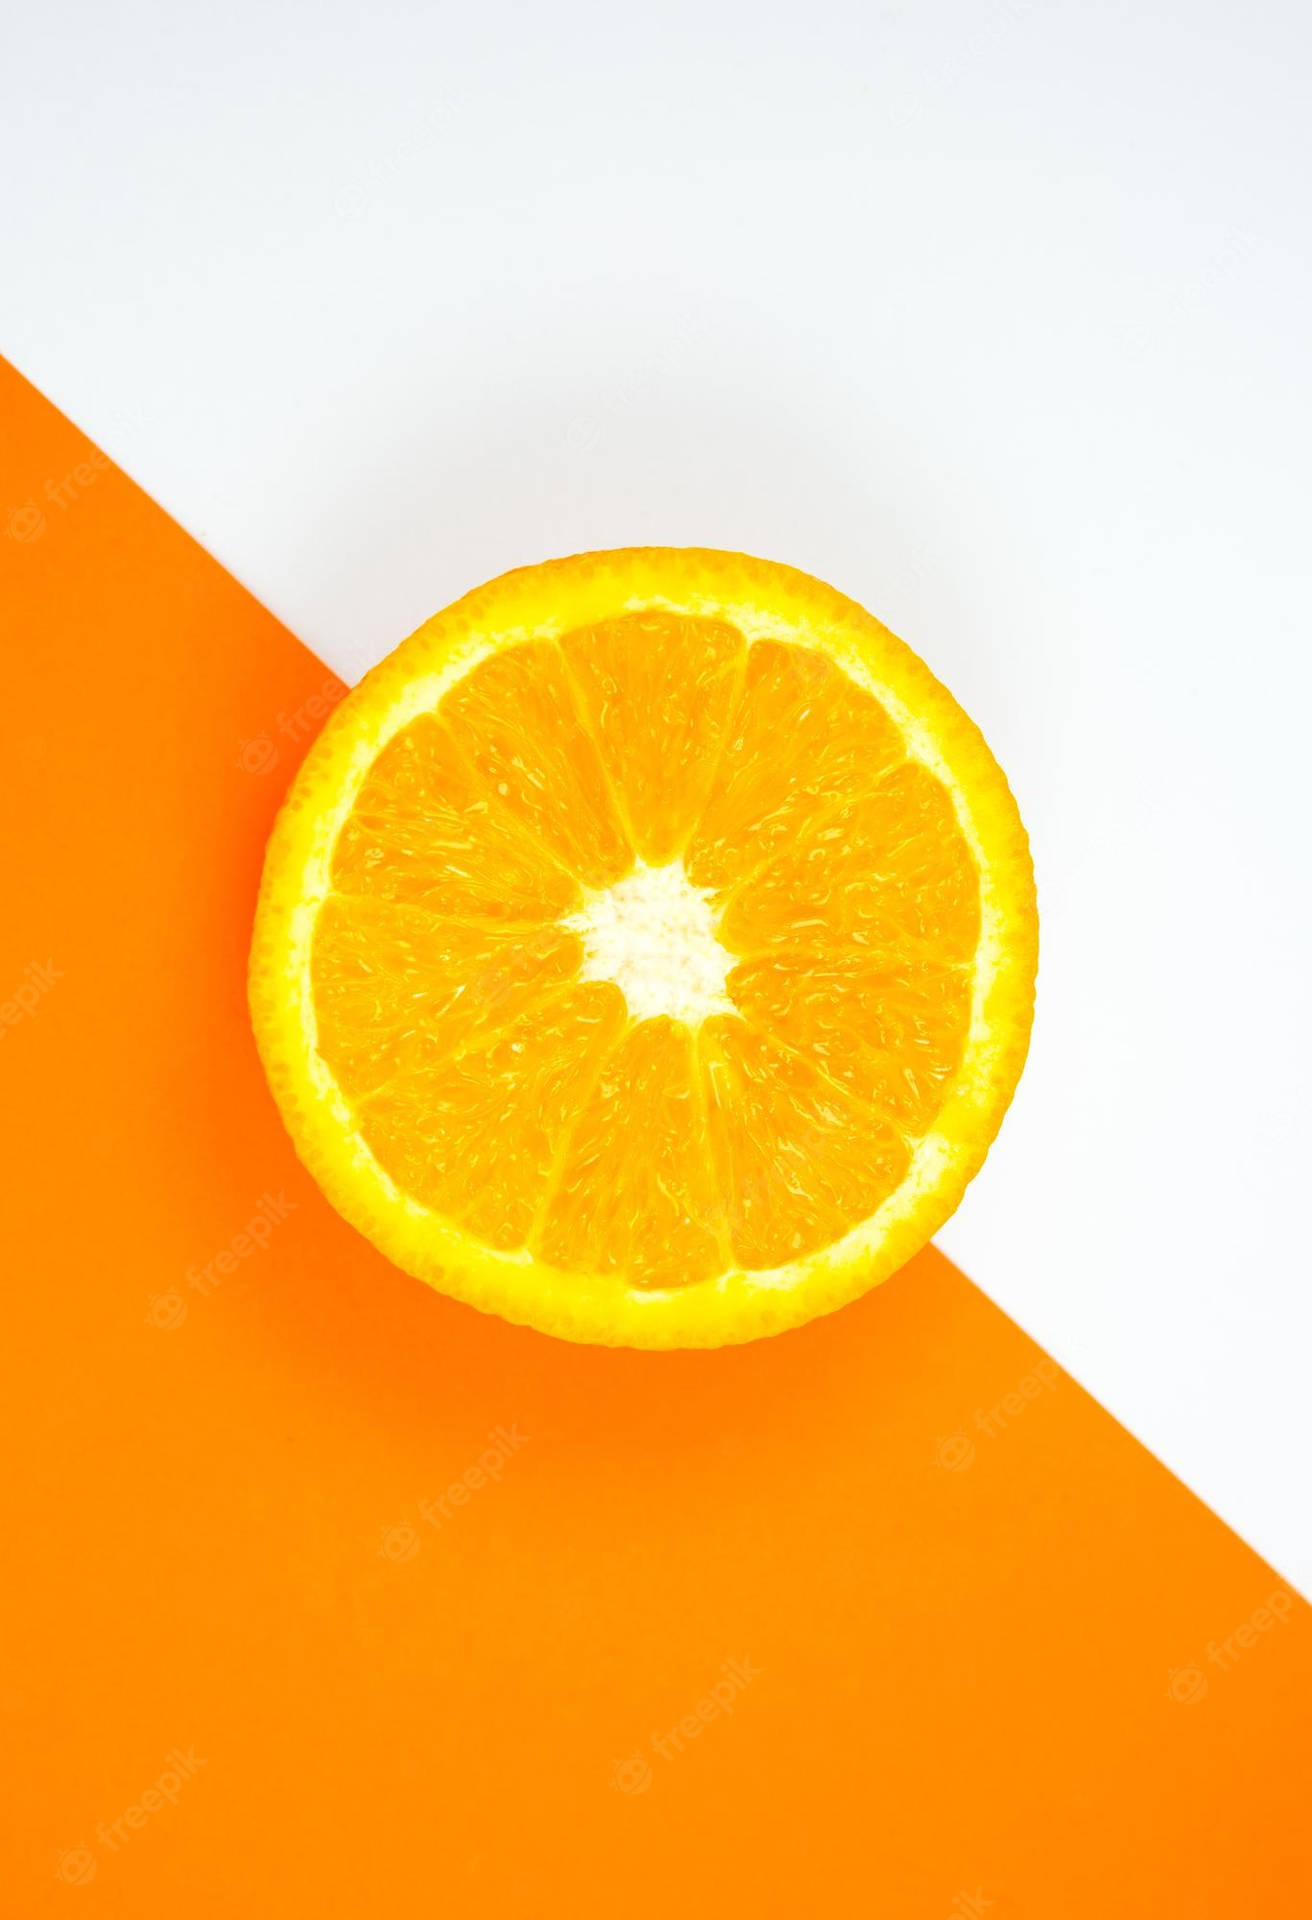 Solid Orange 1367 X 2000 Wallpaper